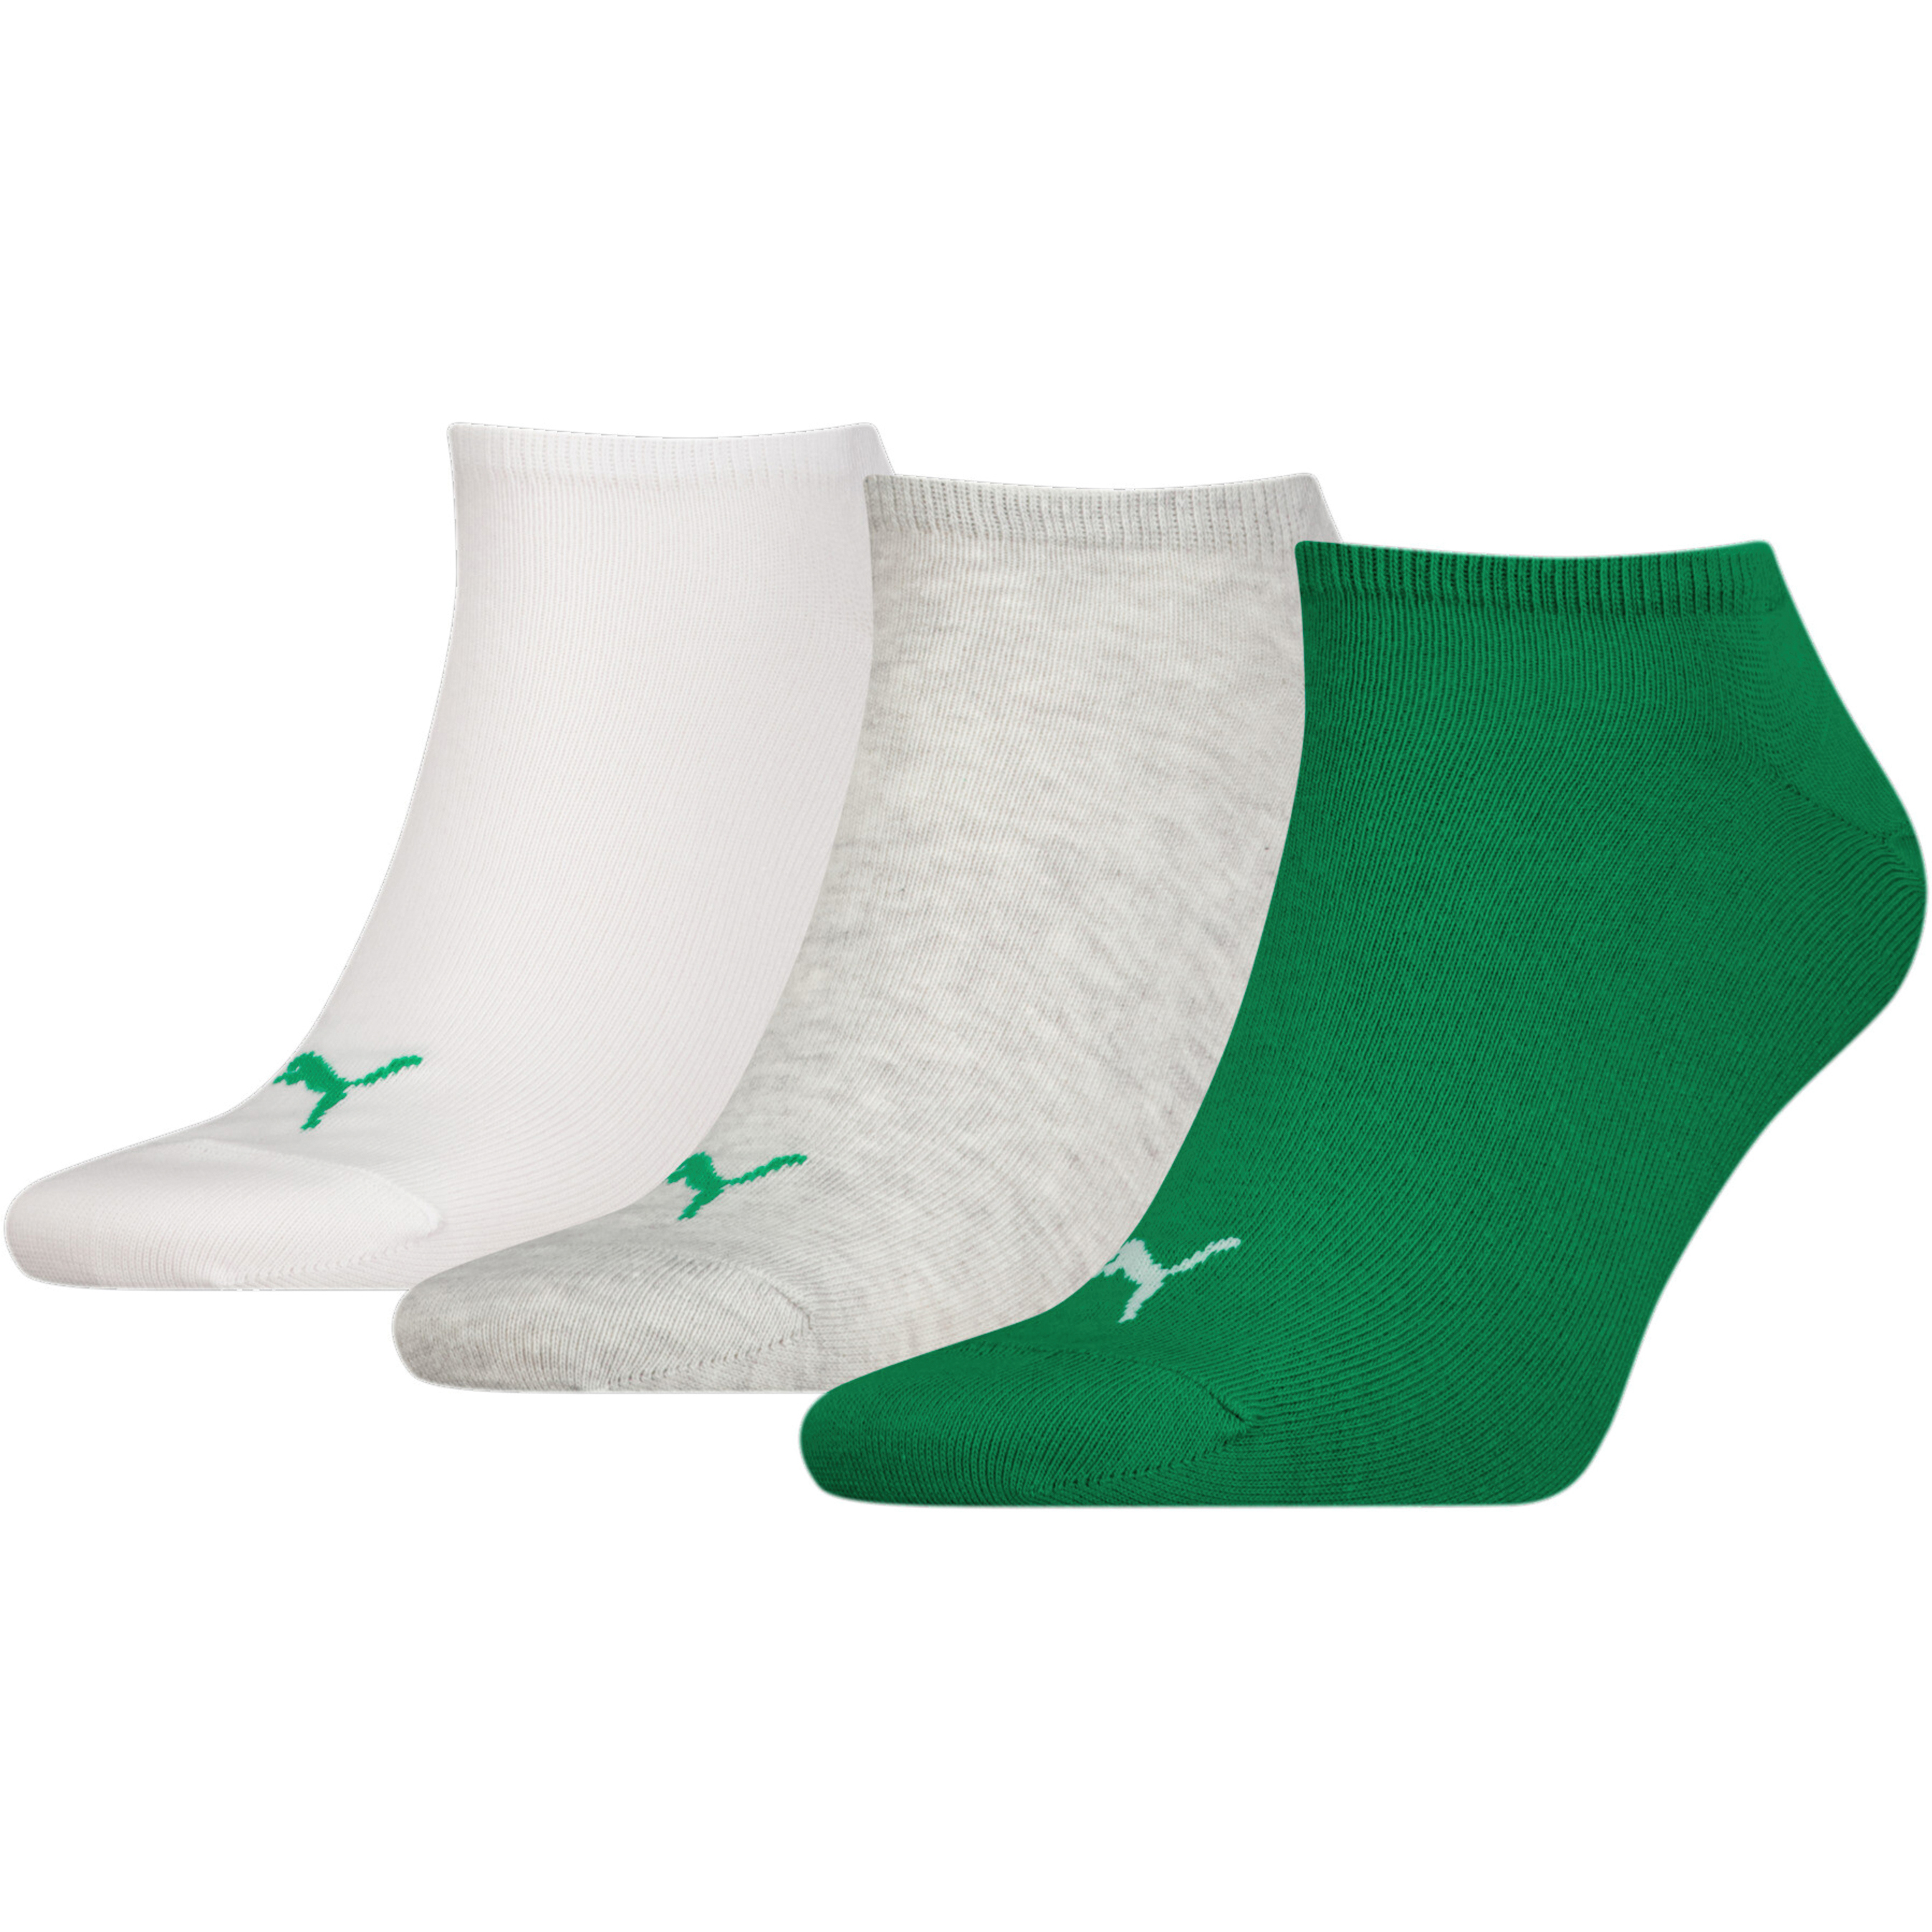 Носки Puma Unisex Sneaker Plain 3P 39-42 3 пары белые, серые, зеленые фото 1